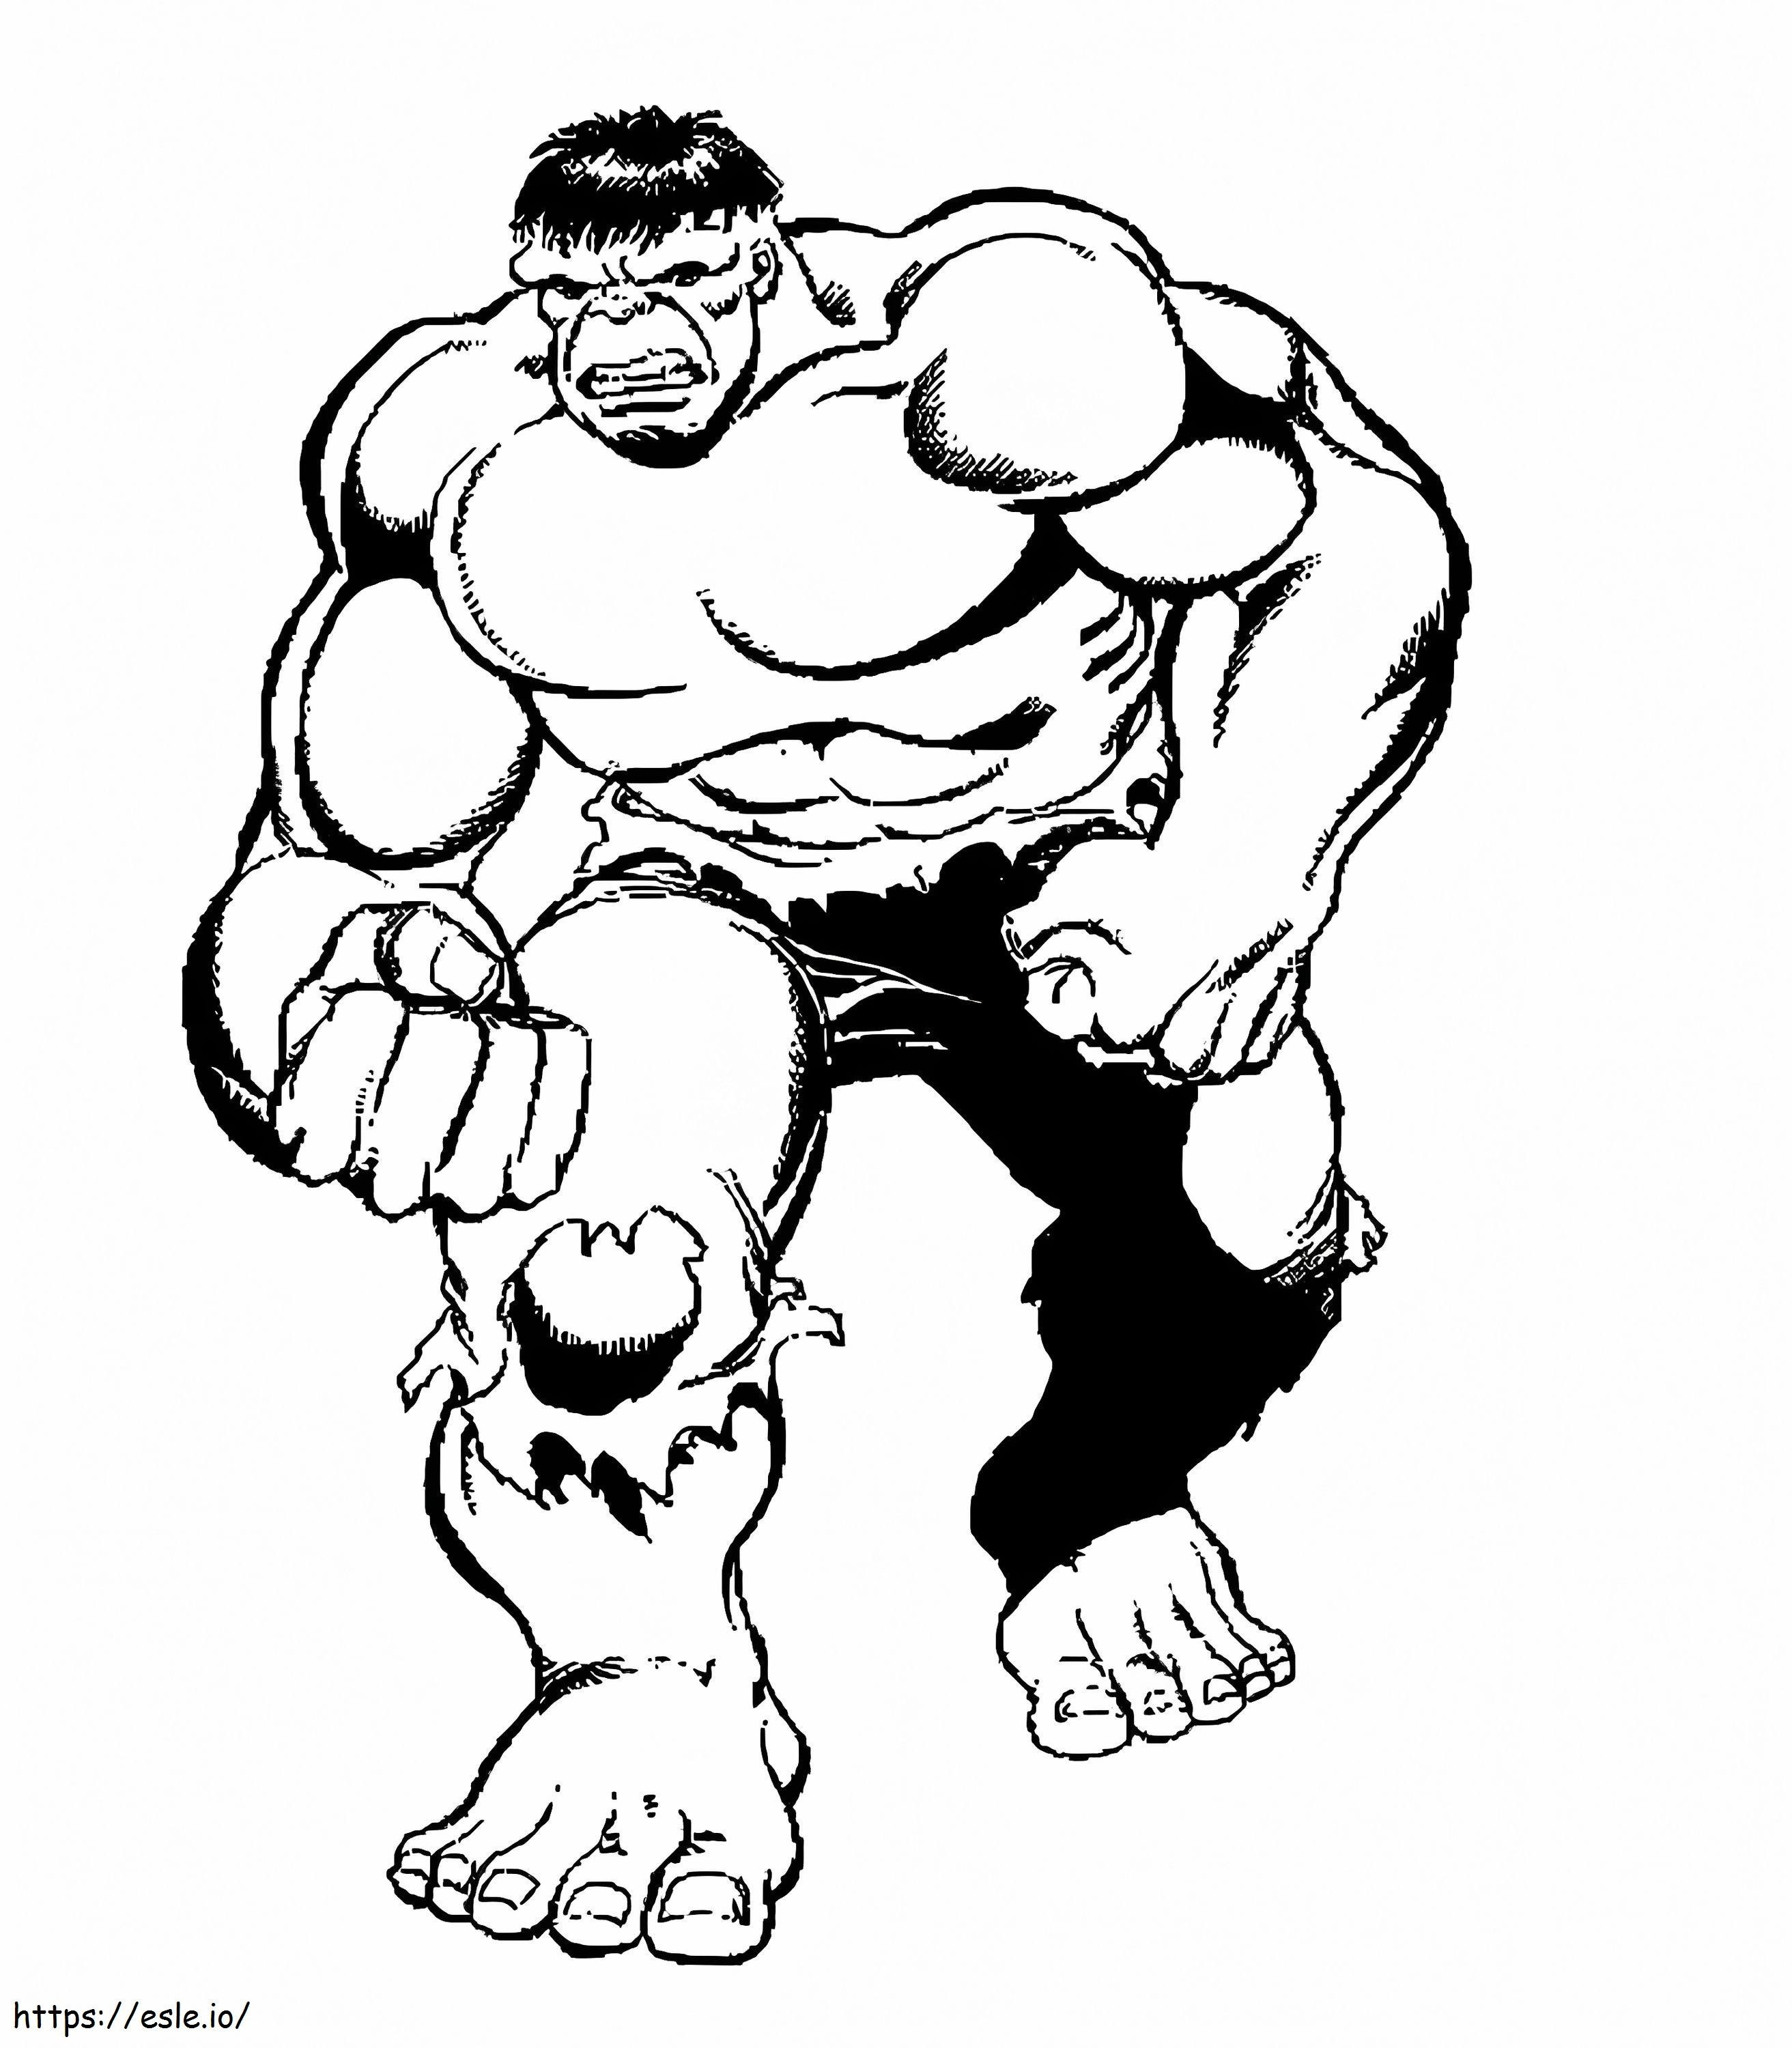 Hulk geht ausmalbilder